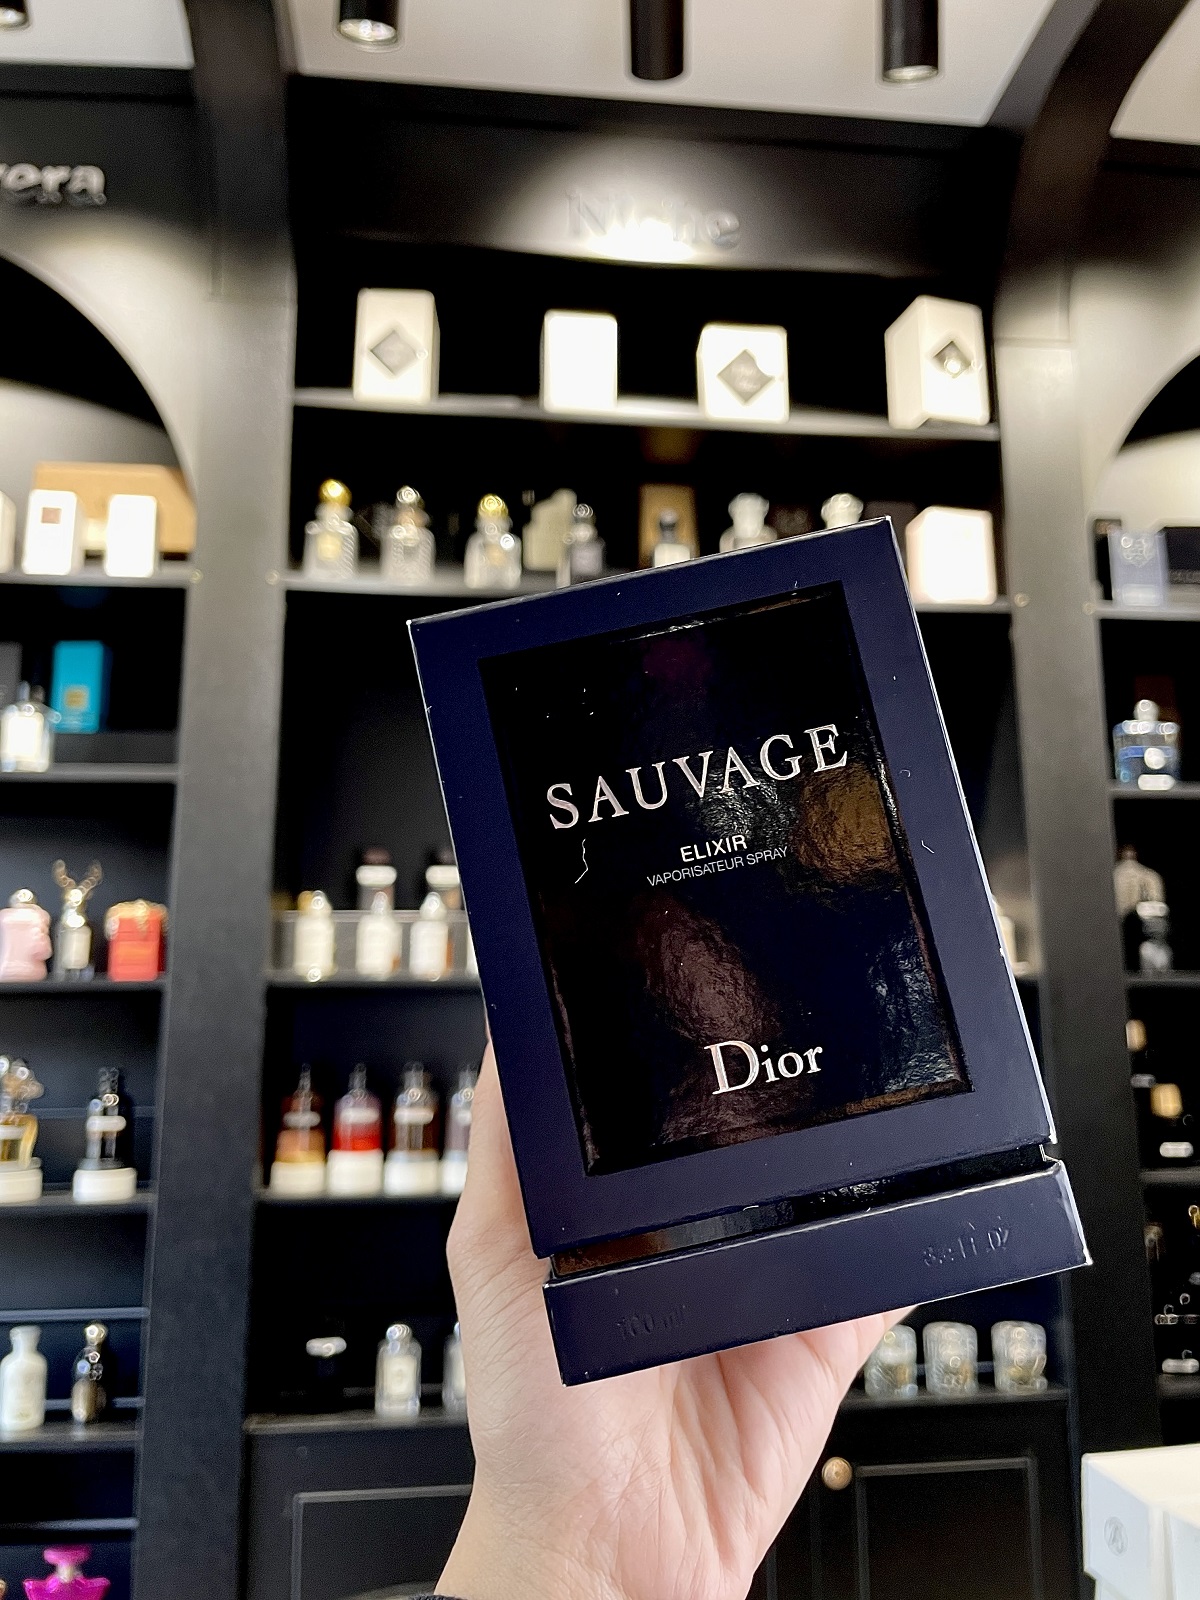 Dior-Sauvage-Elixir-EXP-tai-ha-noi-438-tay-son